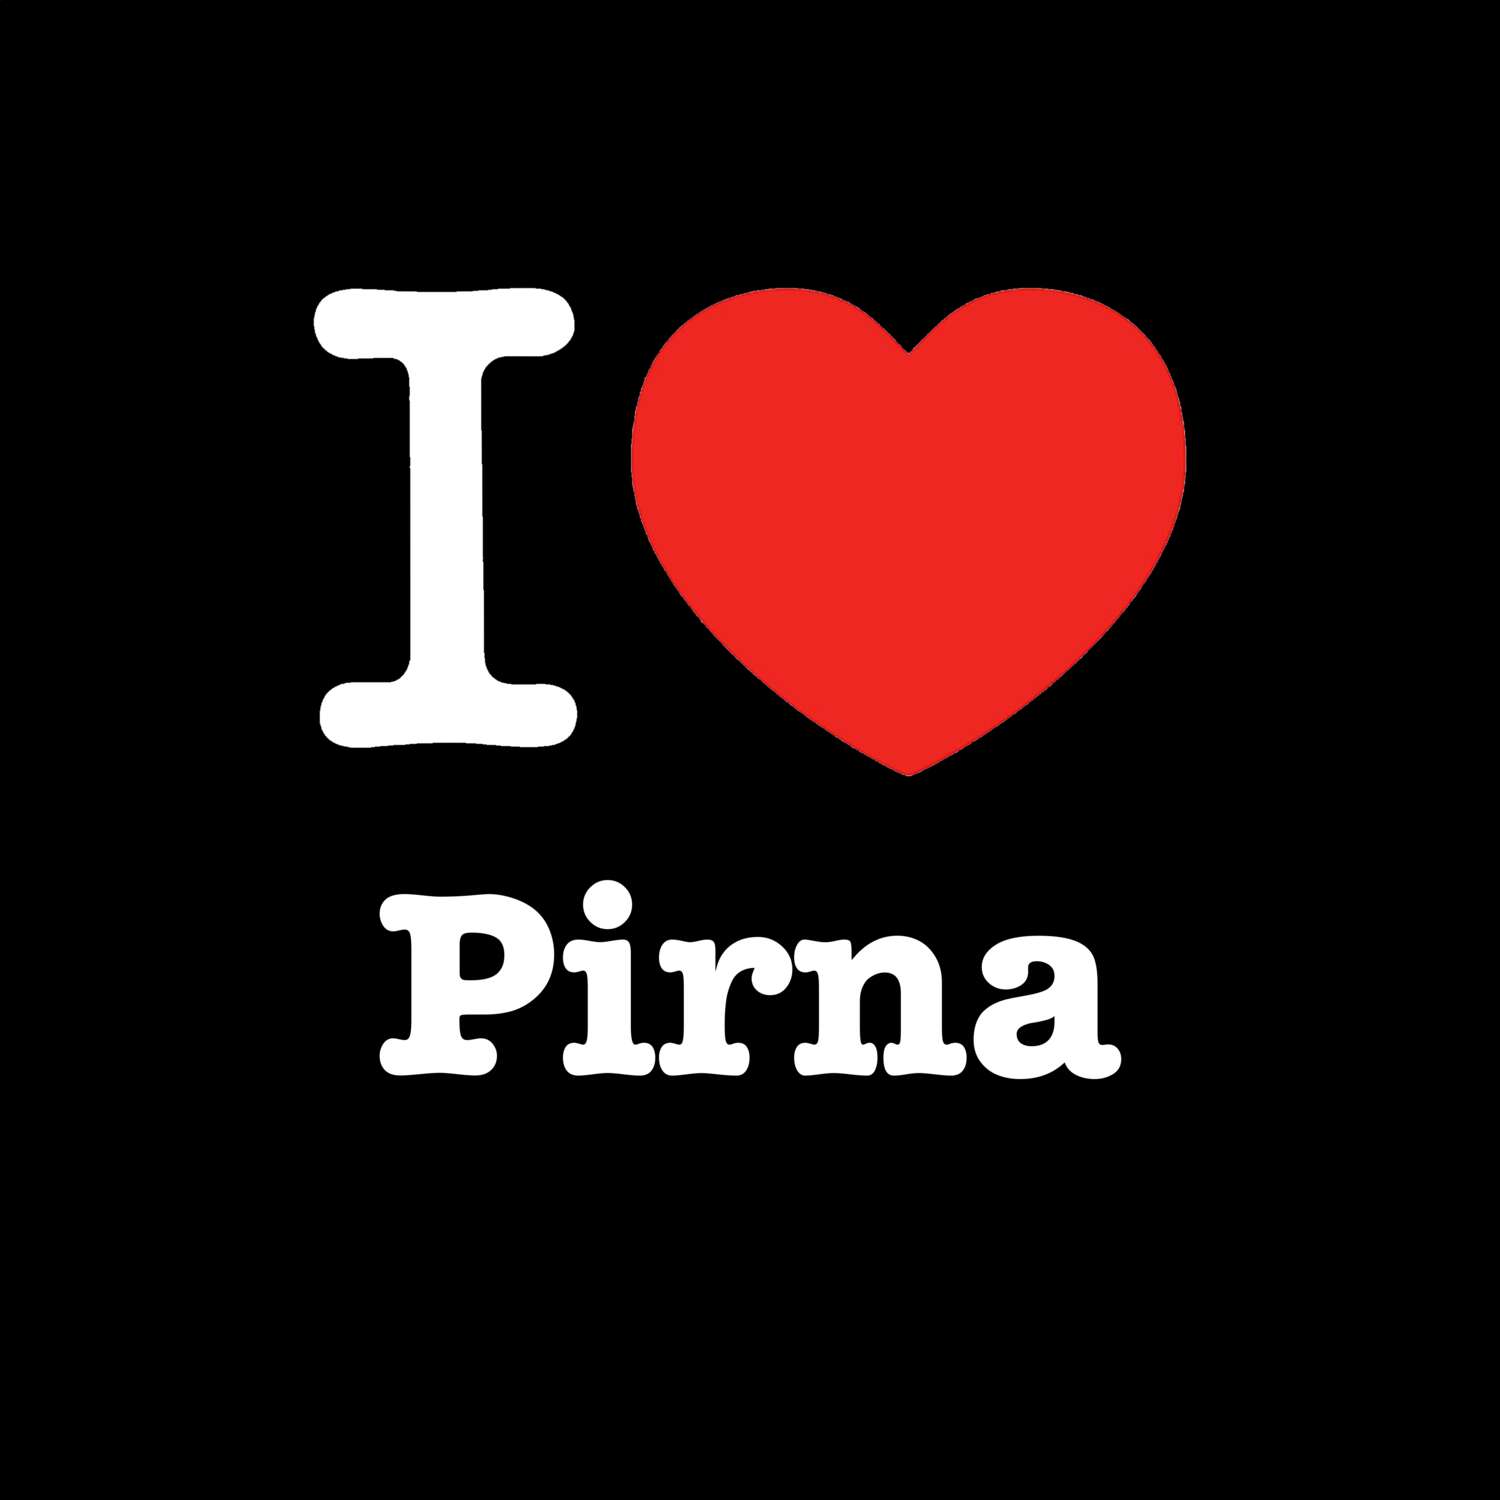 Pirna T-Shirt »I love«